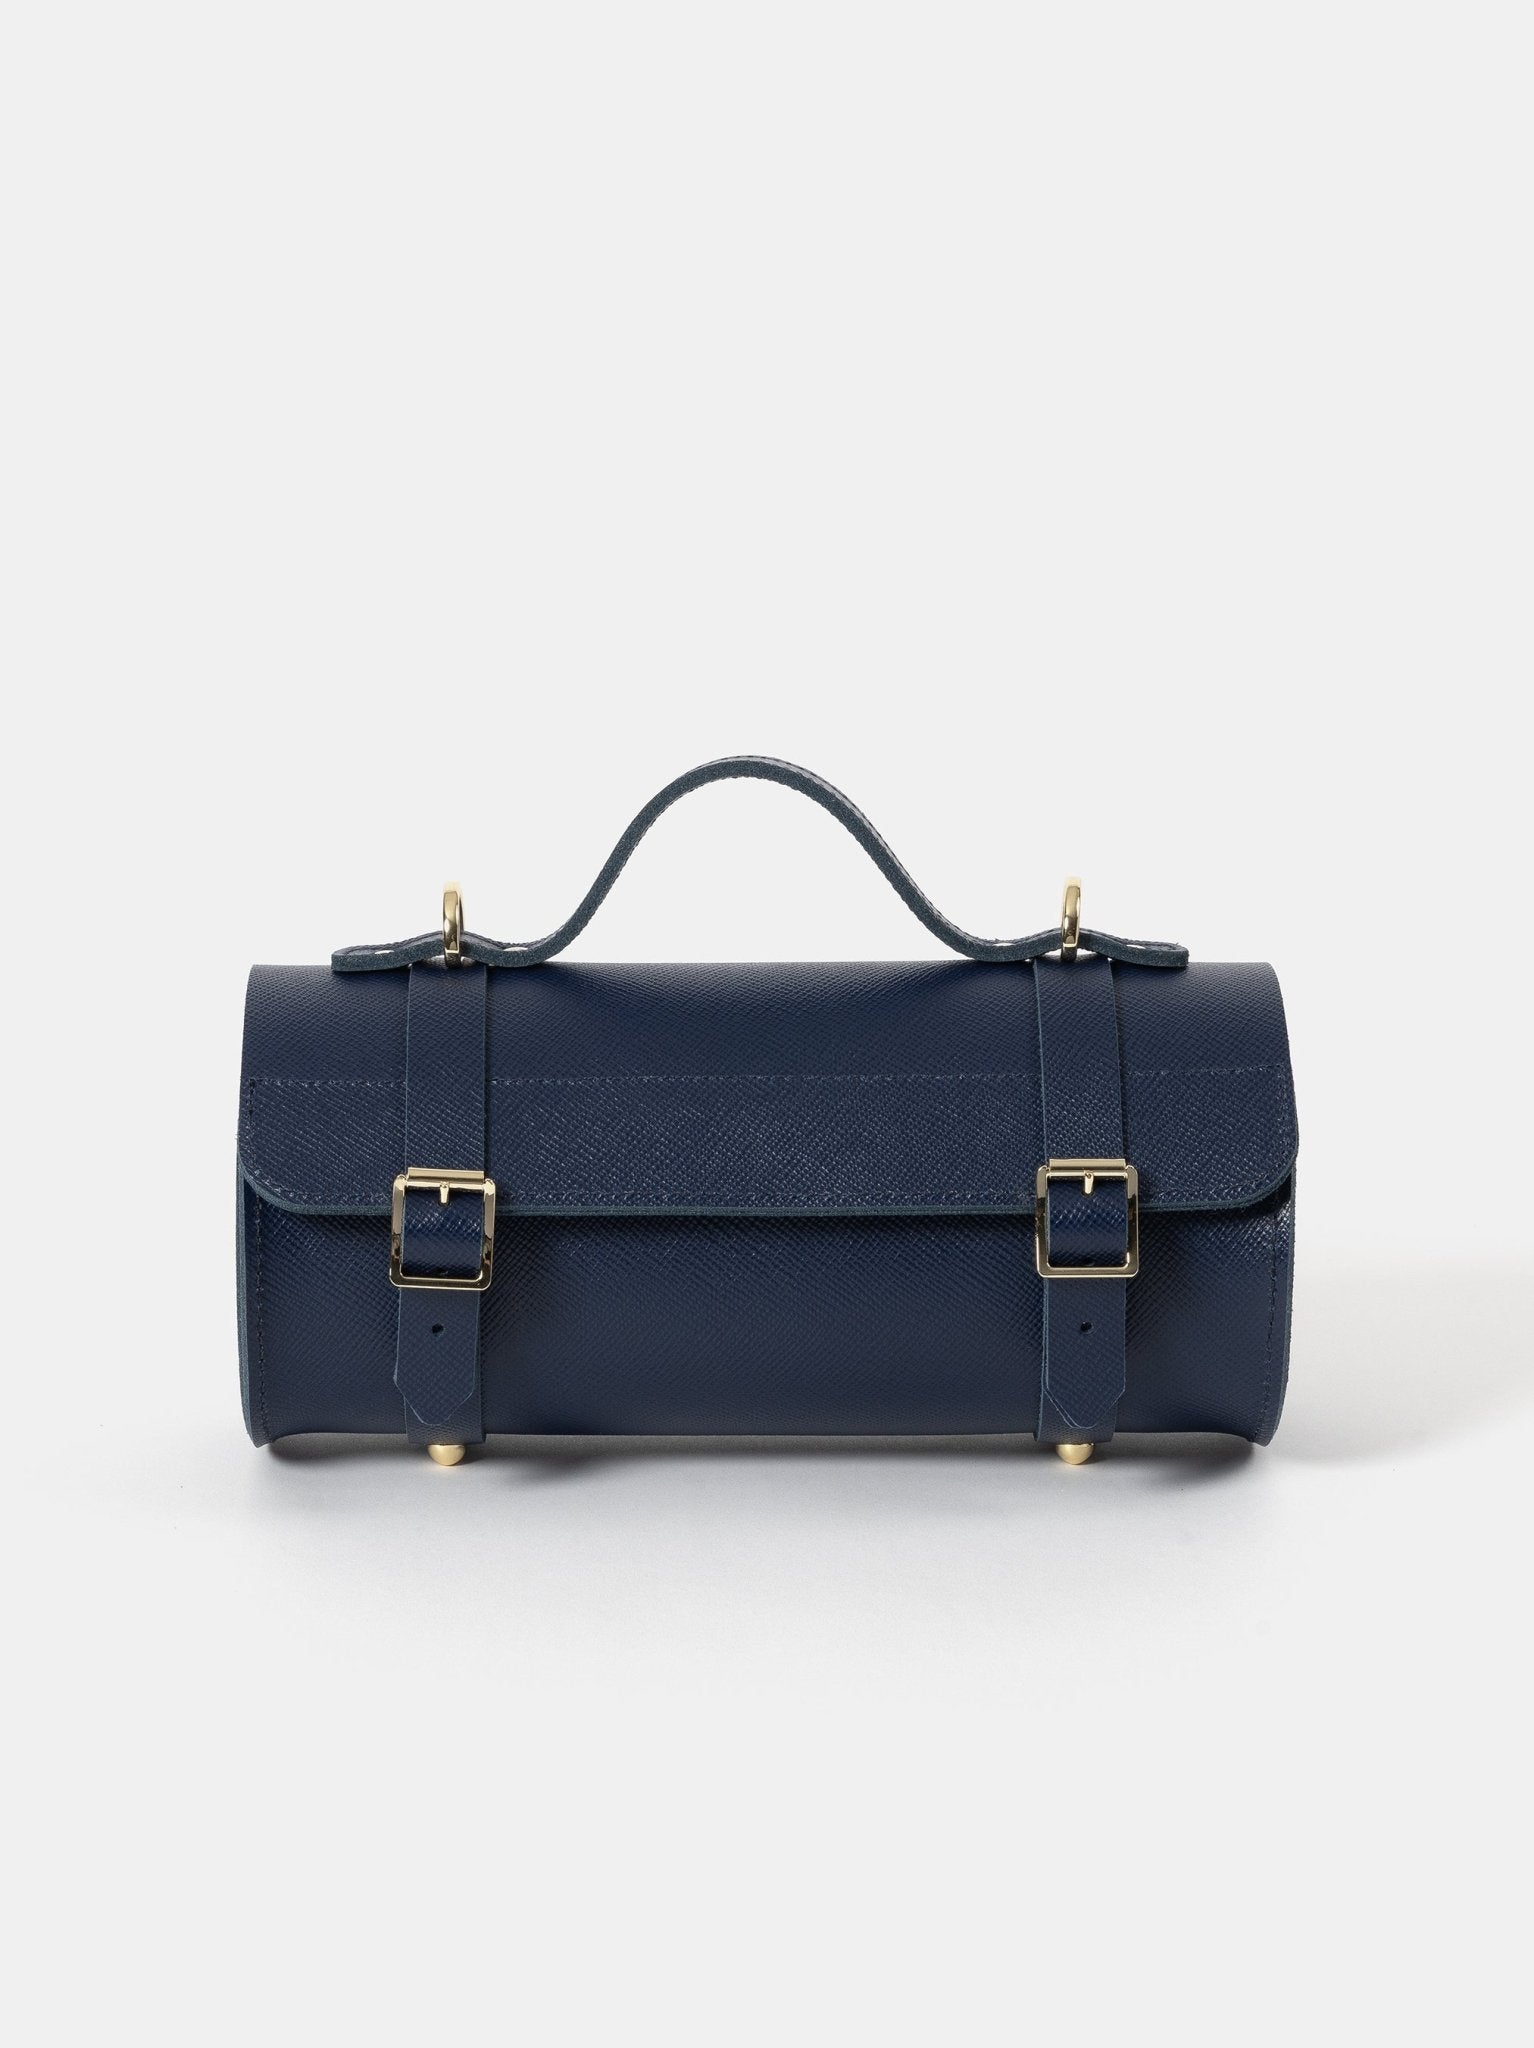 The Cambridge Satchel Co. Unisex Brown Handbag product